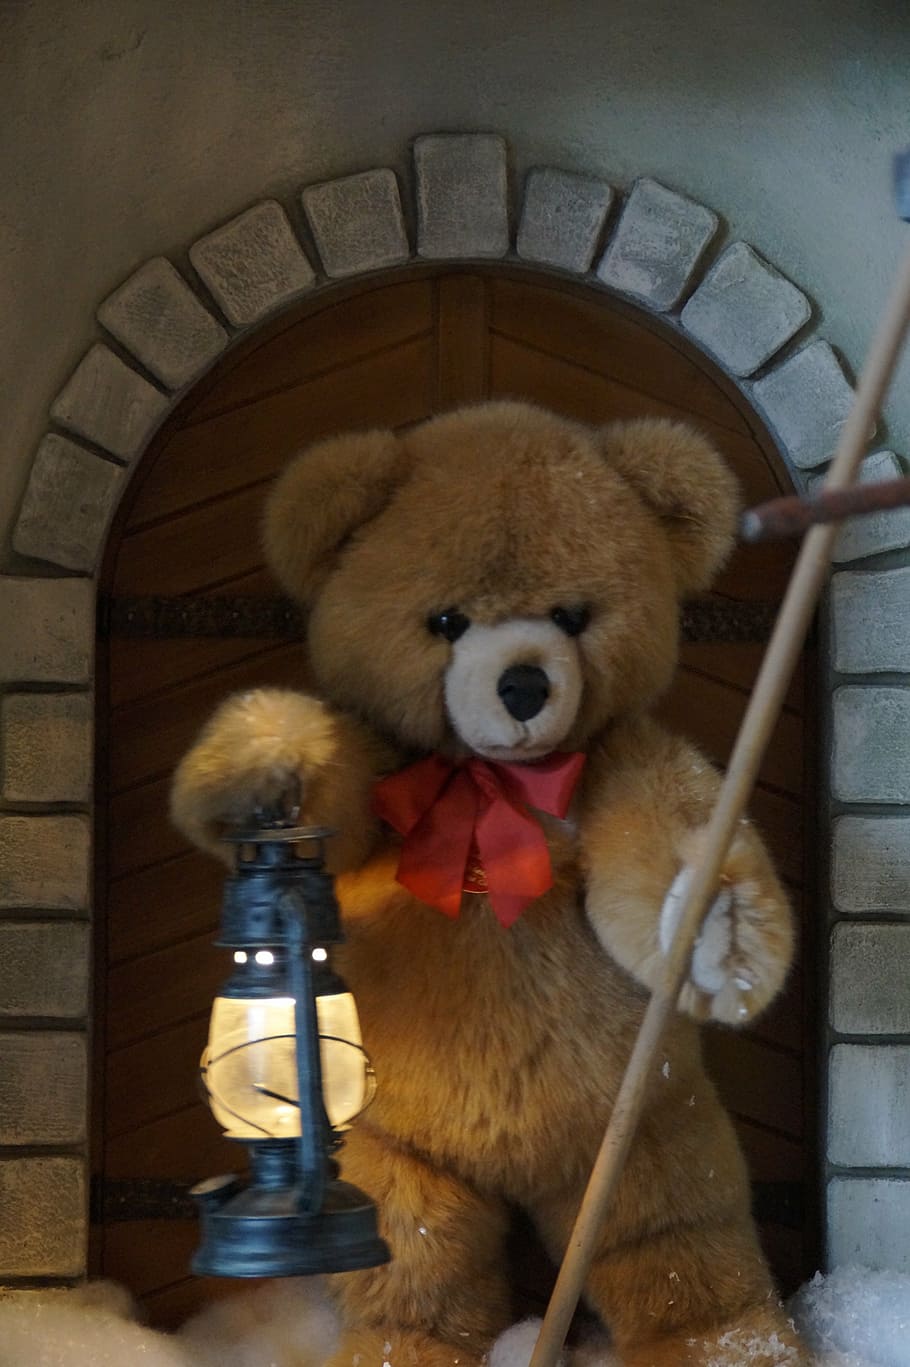 teddy, lamp, guard, door, goal, soft toy, stuffed animal, toys